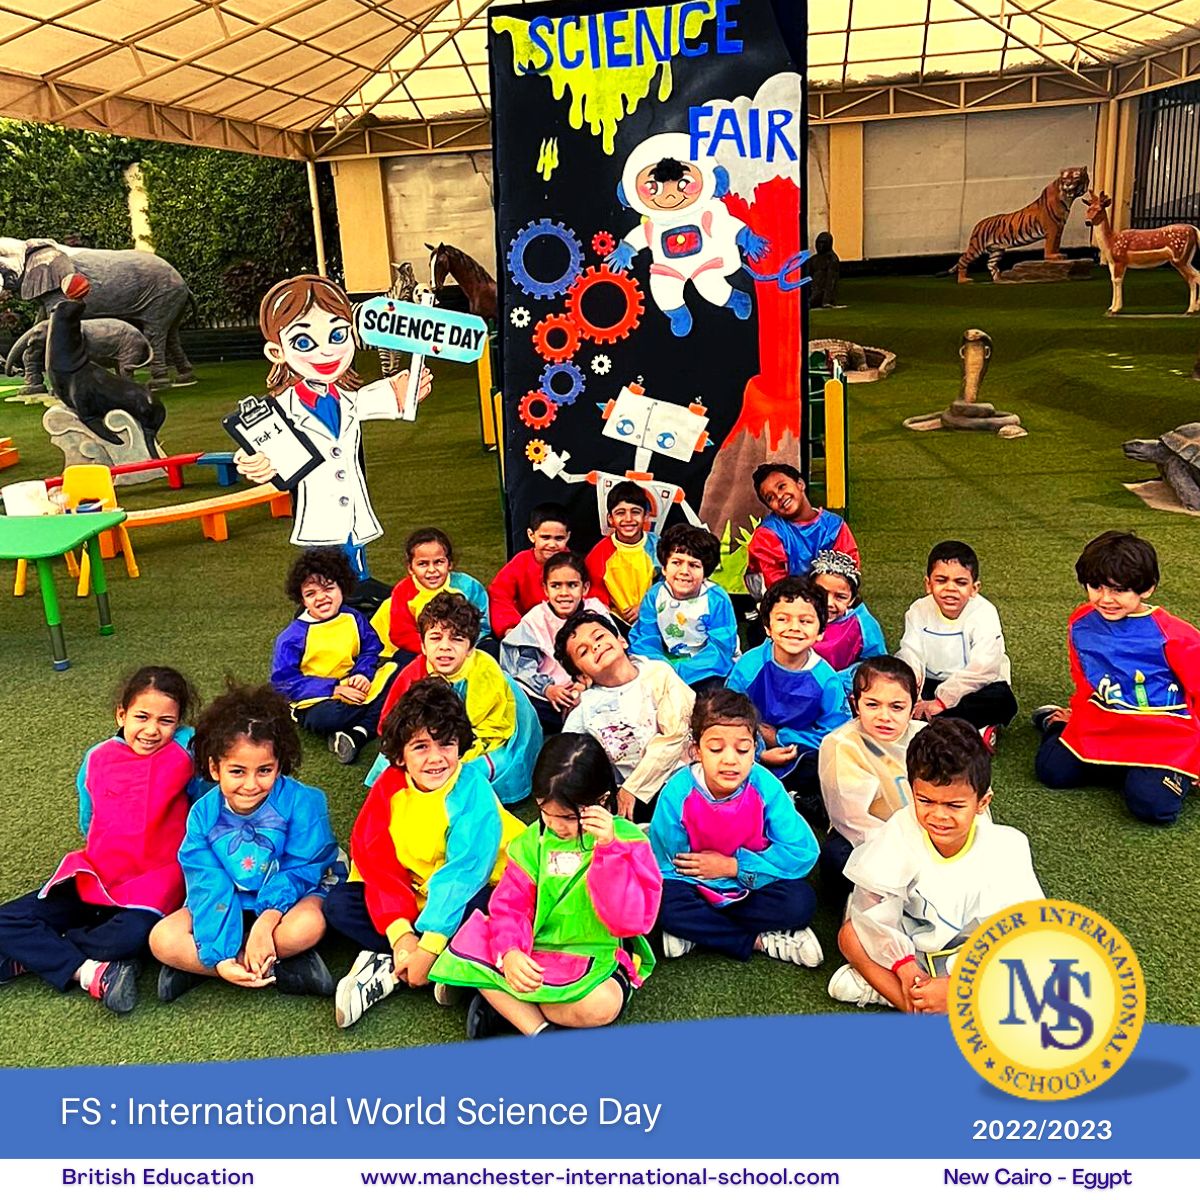 FS : International World Science Day